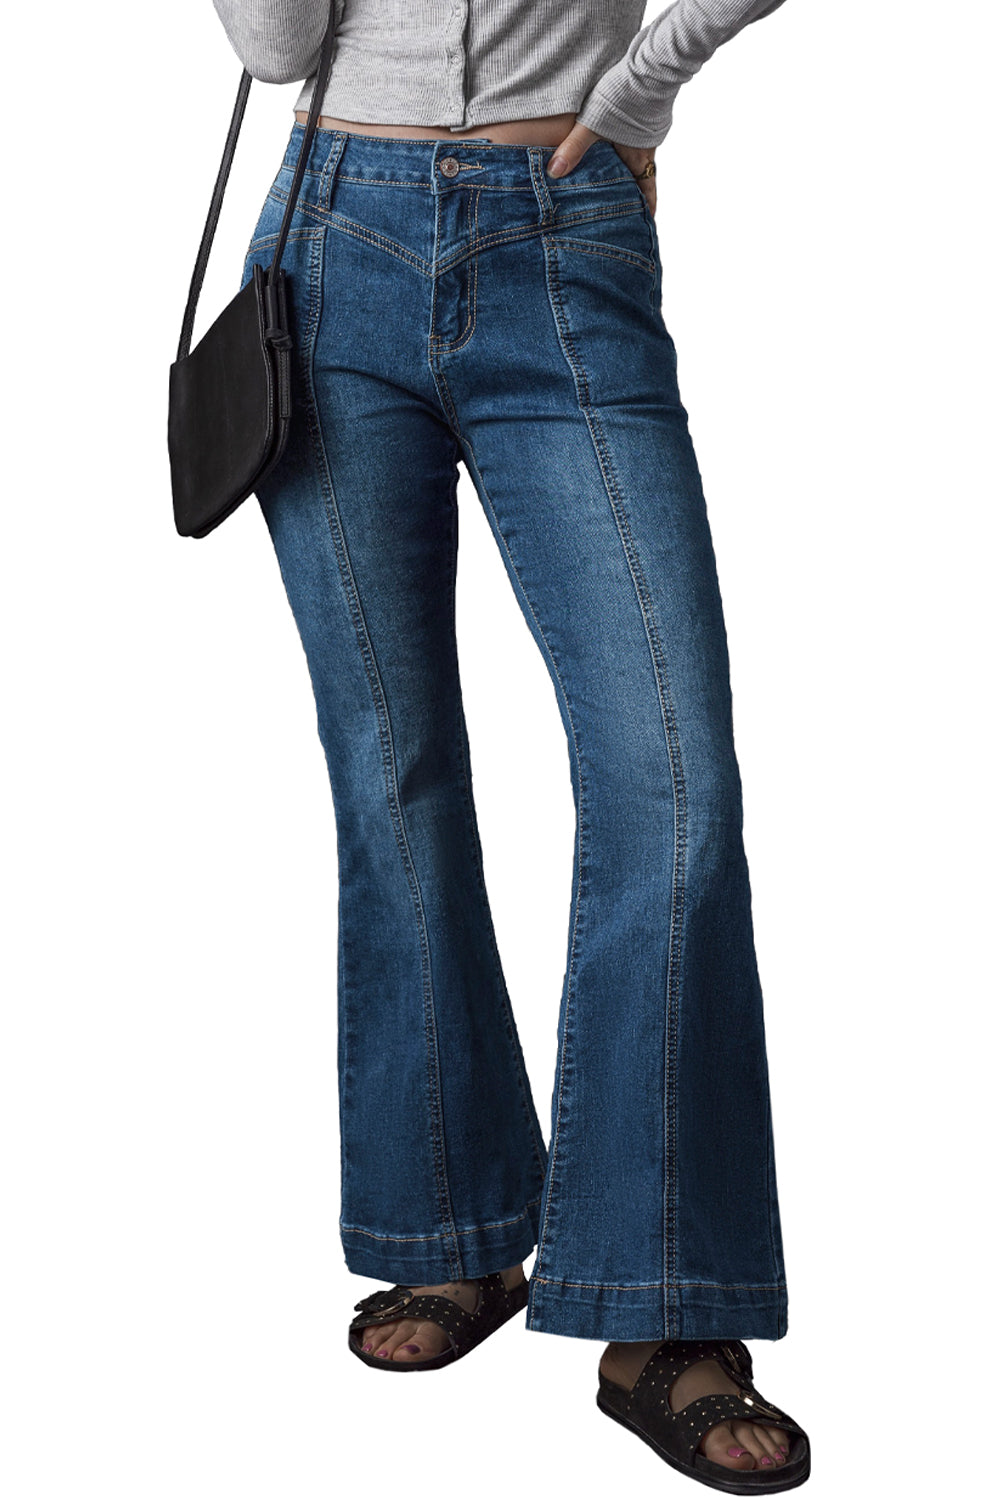 Blue High Waist Seam Stitching Pocket Flare Jeans